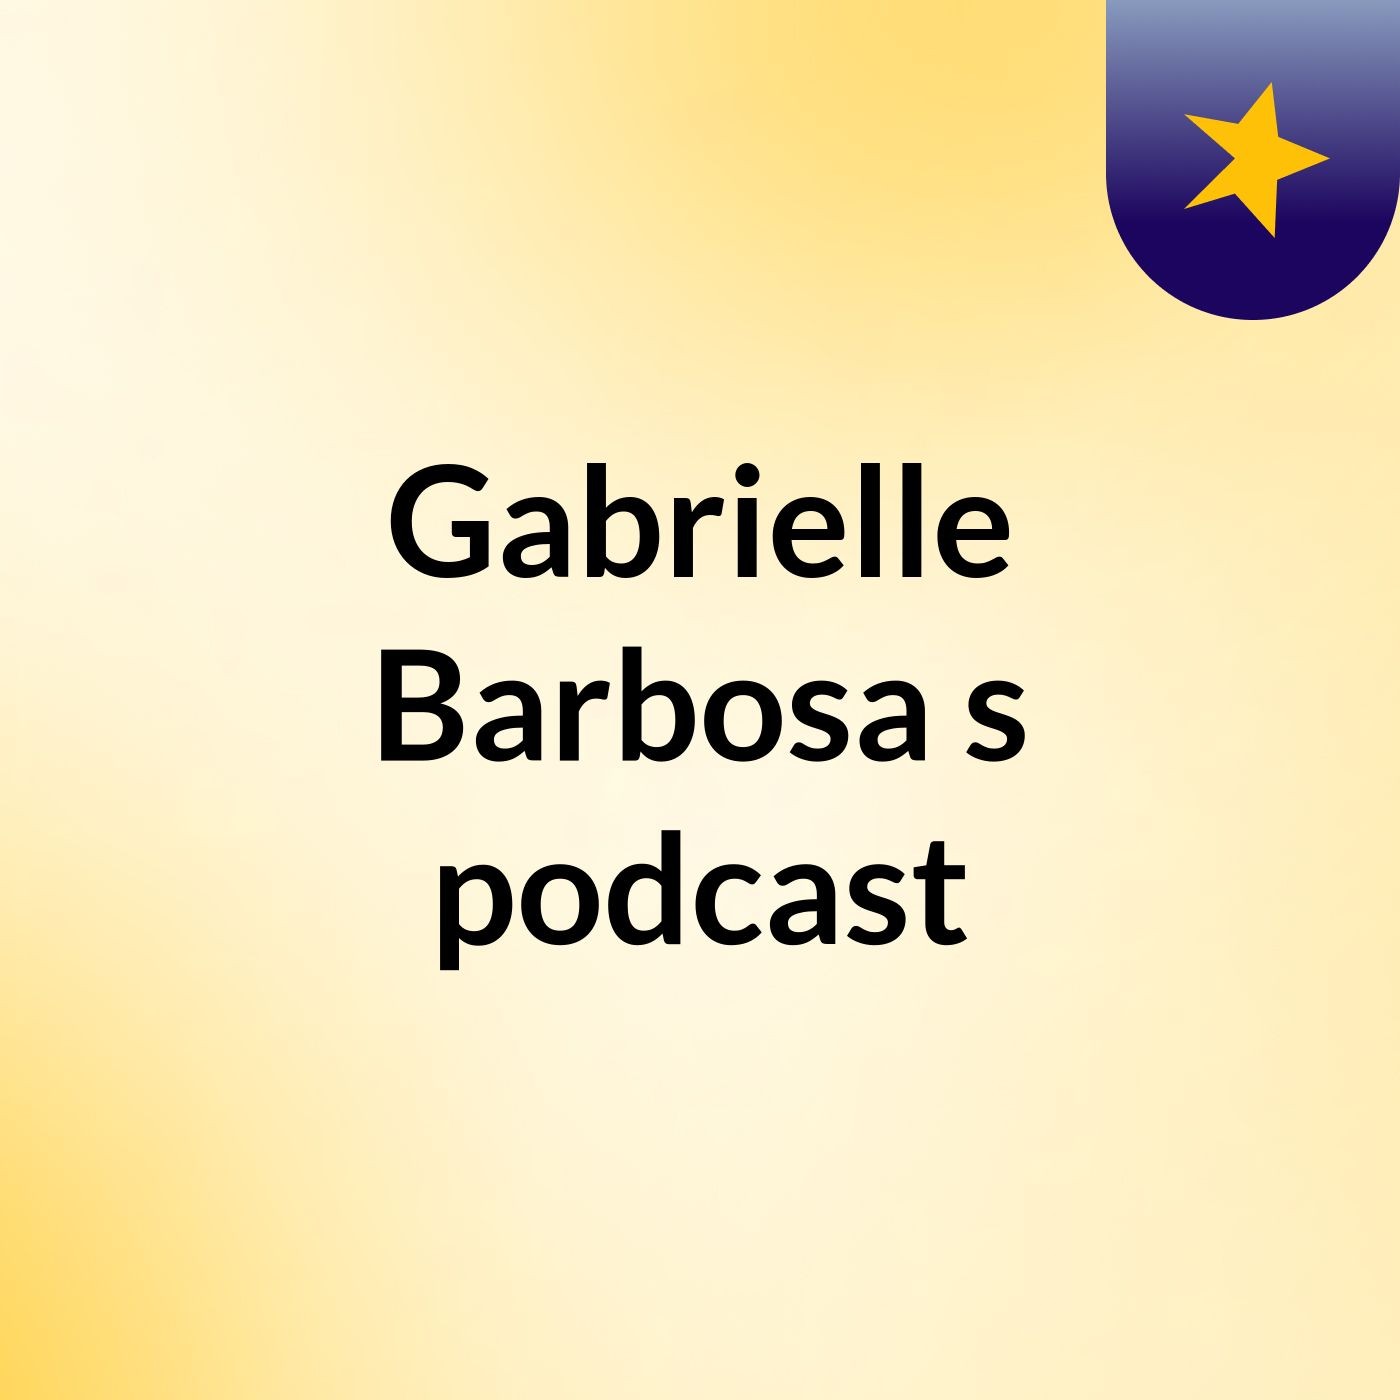 Gabrielle Barbosa's podcast